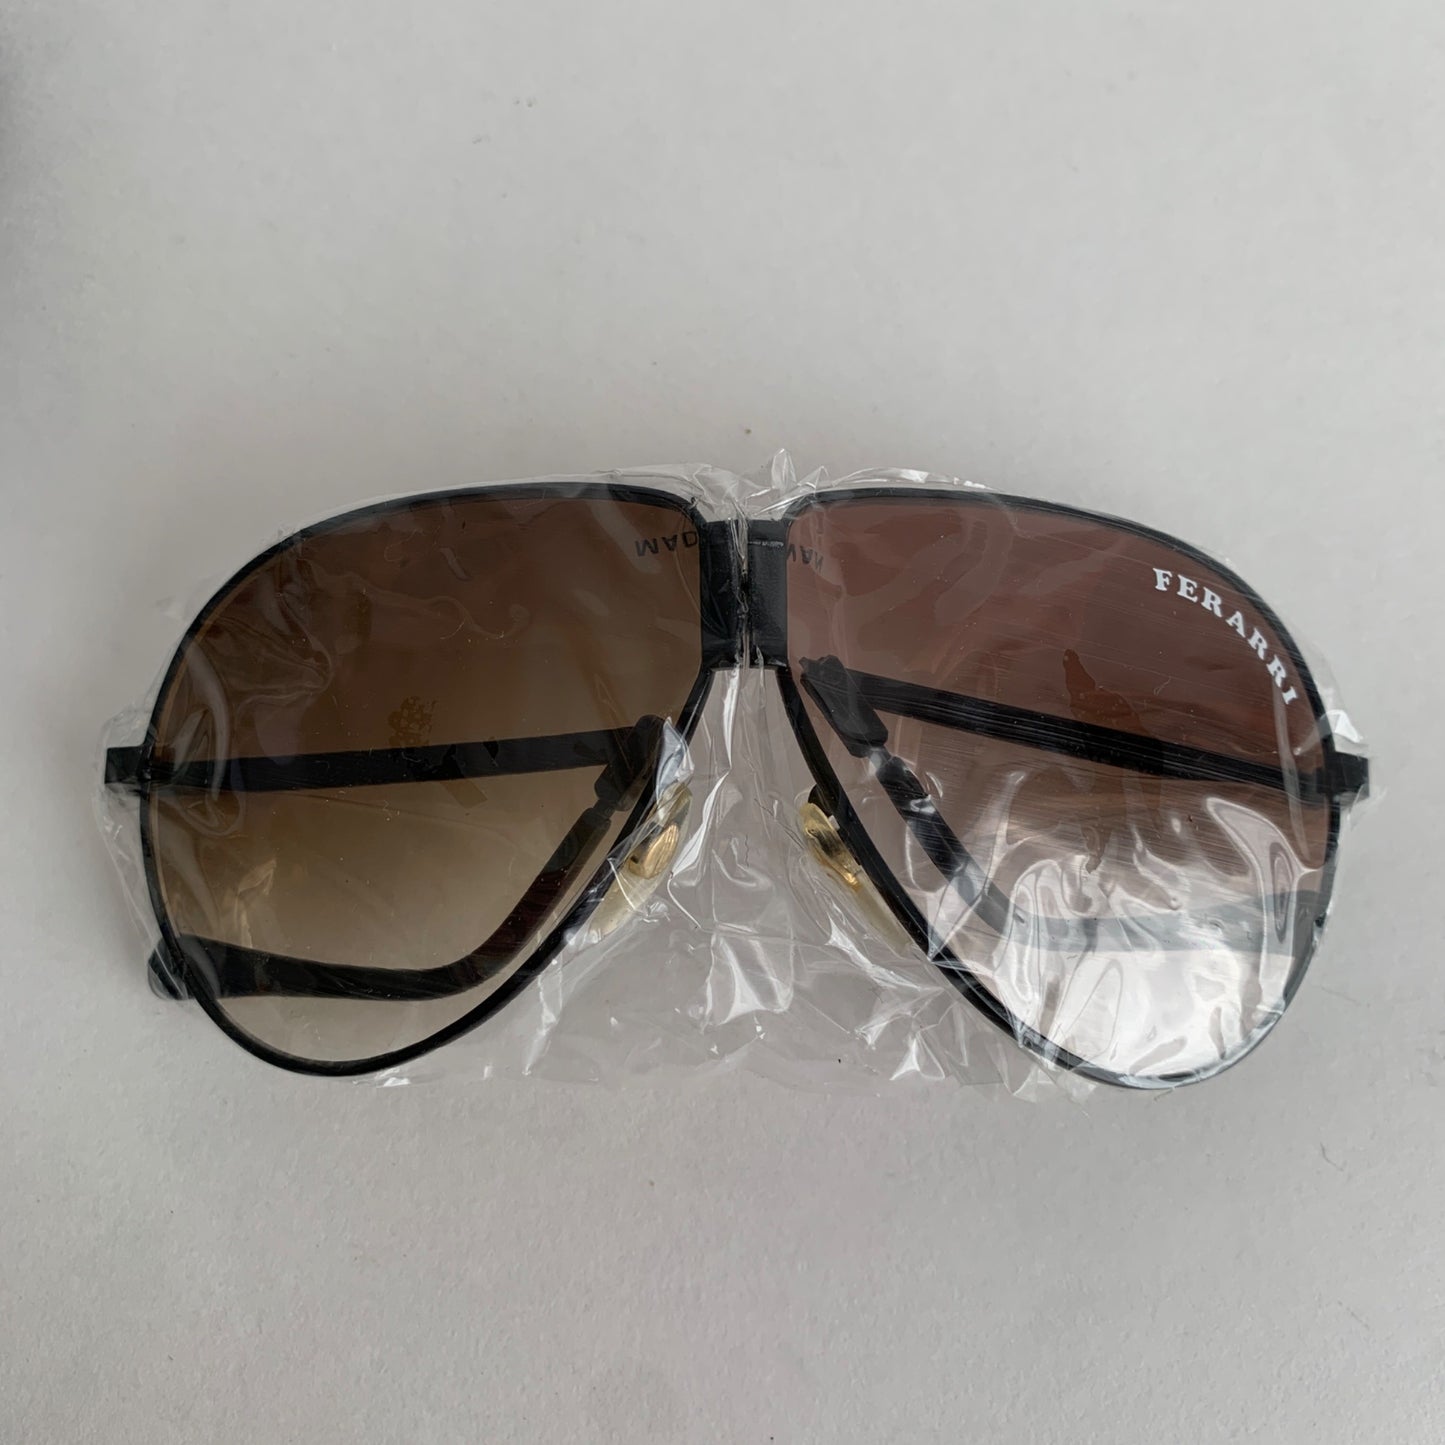 Ferarri Vintage Men's Folding Aviator Sunglasses with Pouch